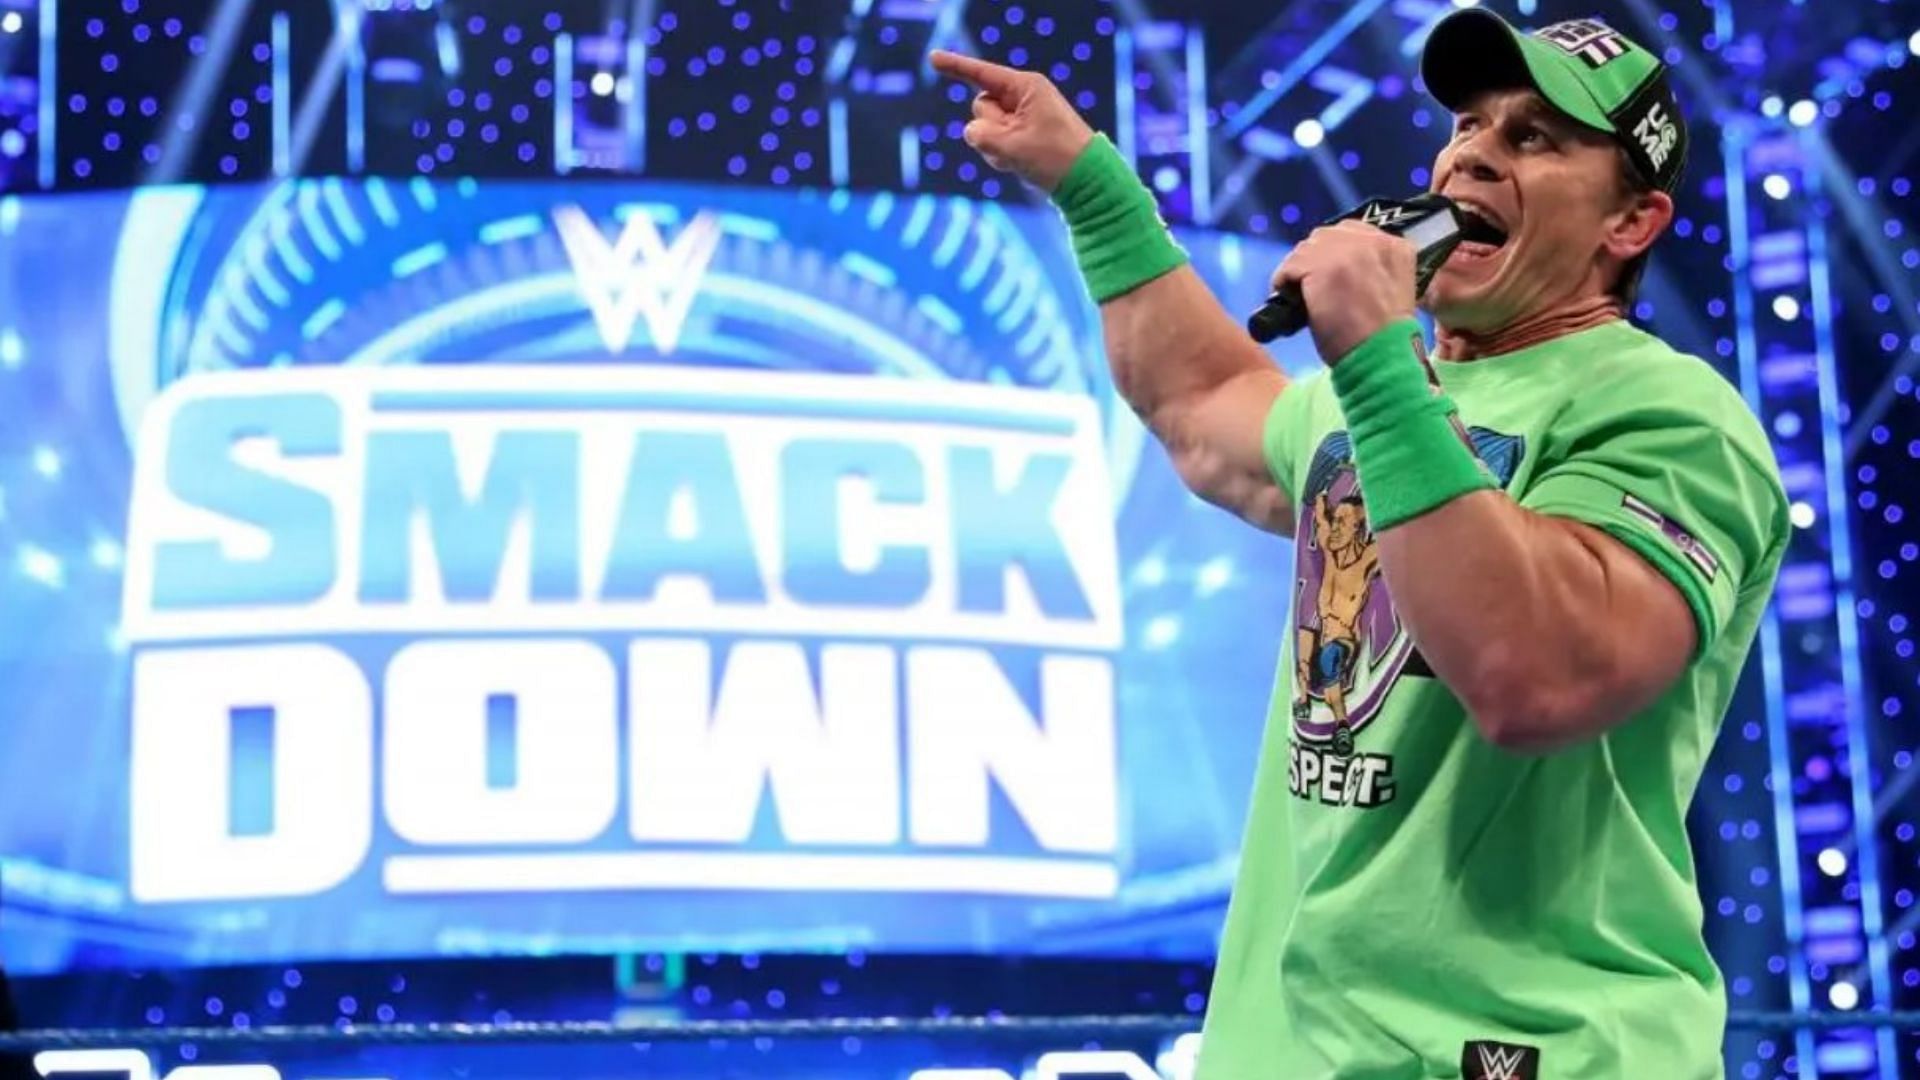 John Cena gave an electrifying post-match promo on WWE SmackDown